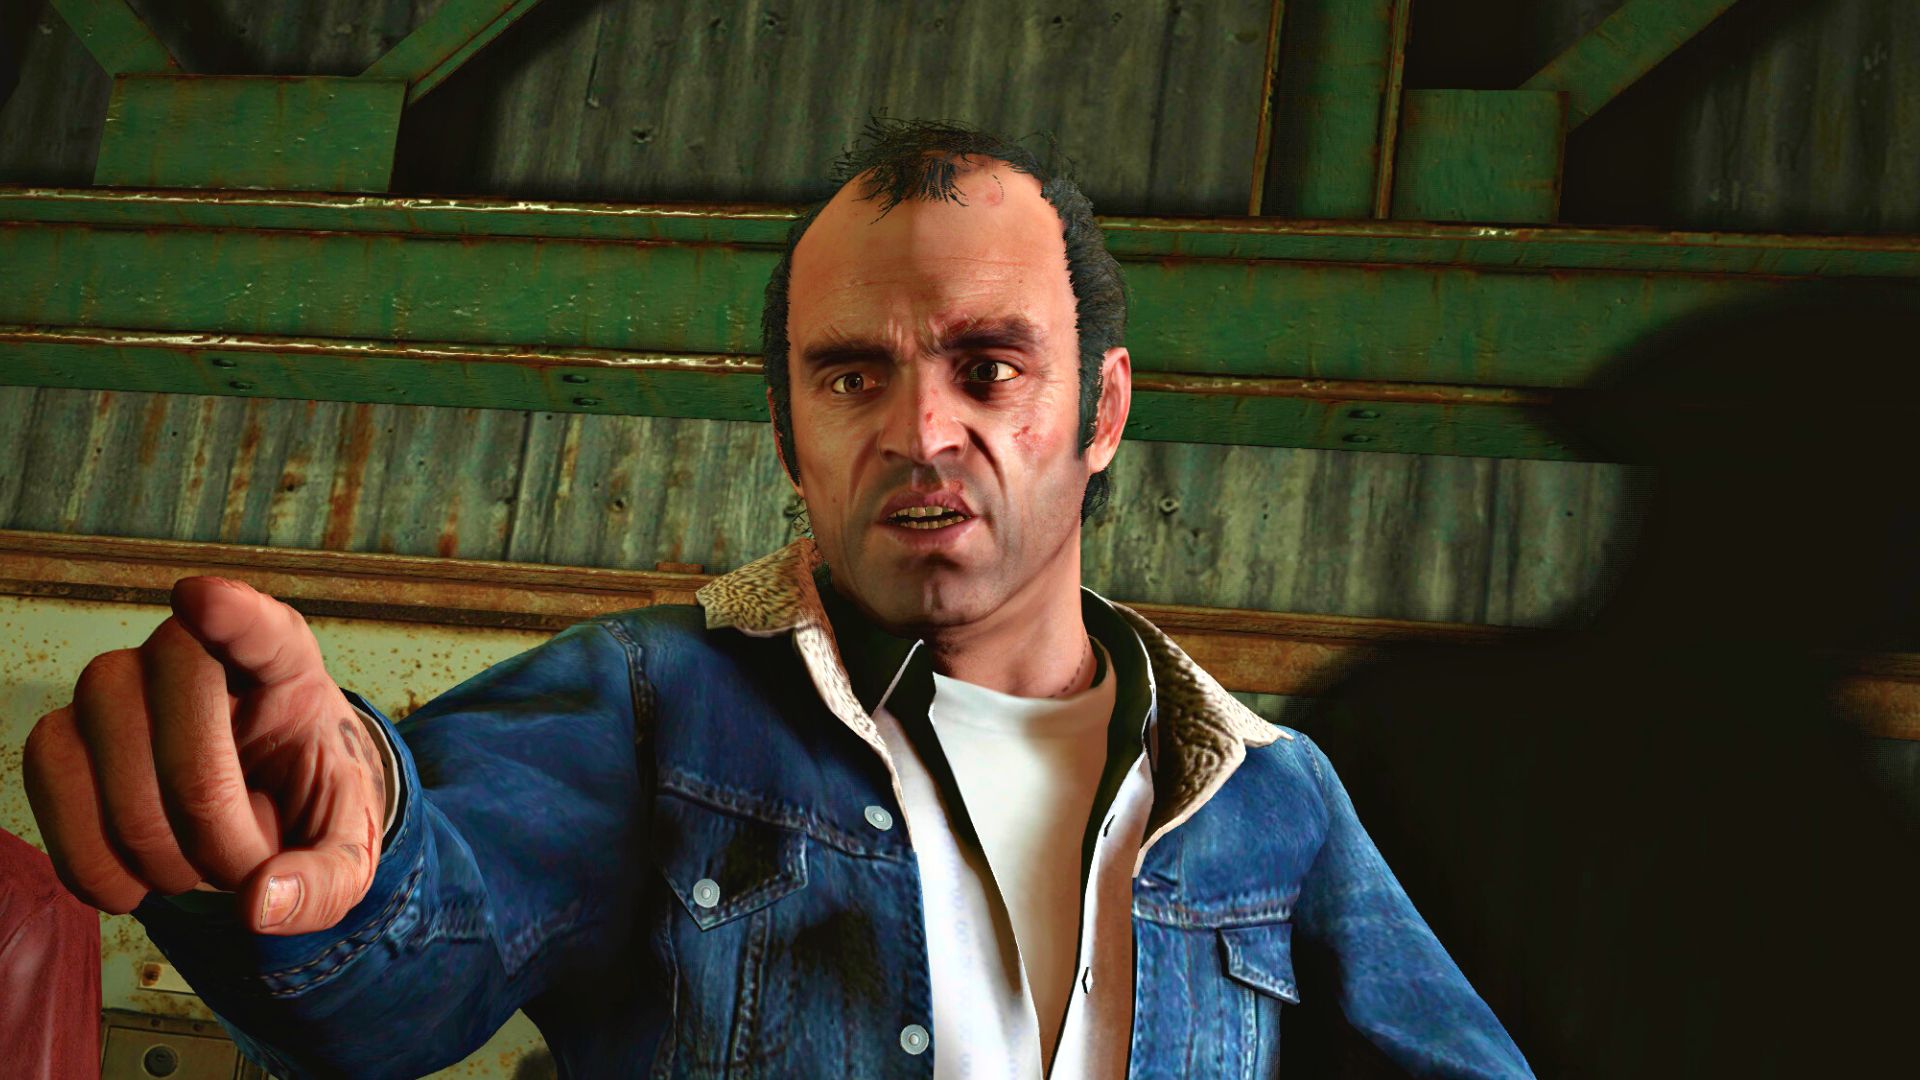 Alleged Grand Theft Auto 6 gameplay leaks online 